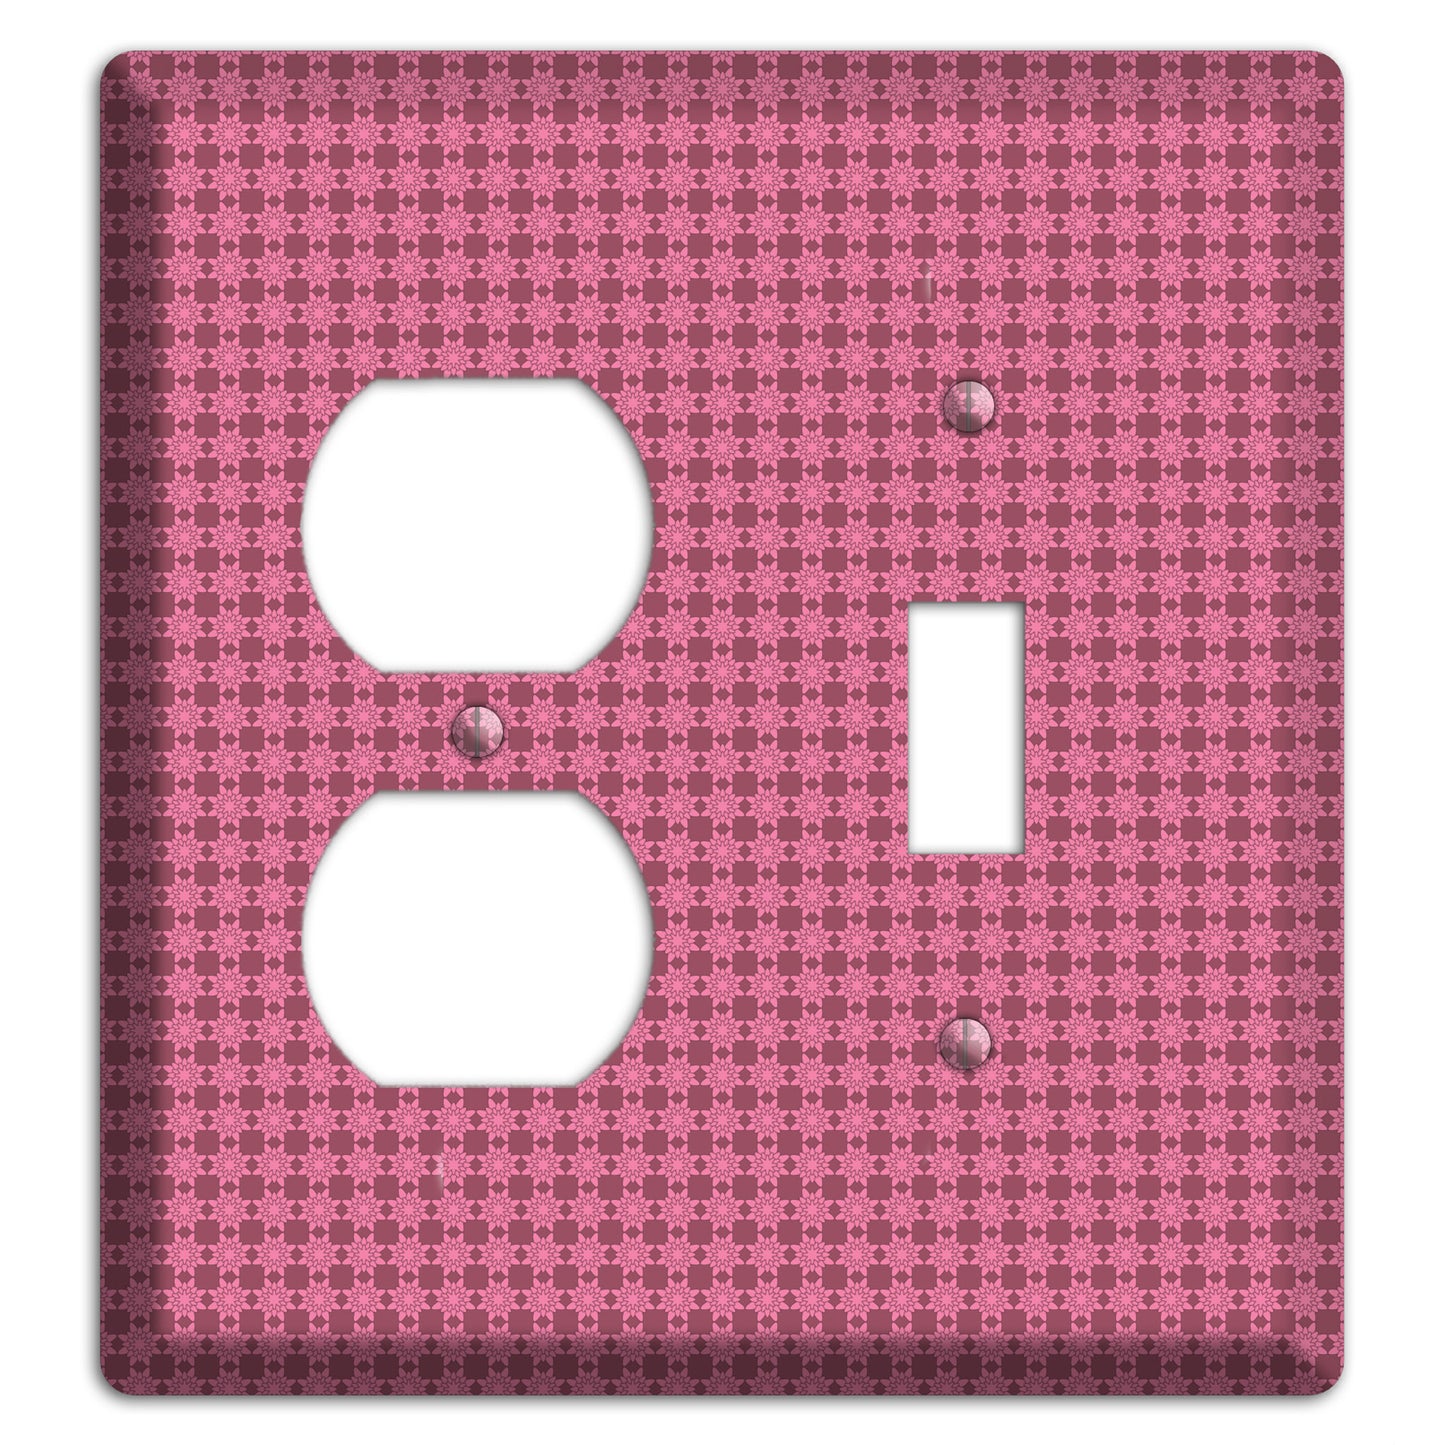 Multi Pink Tiled Duplex / Toggle Wallplate